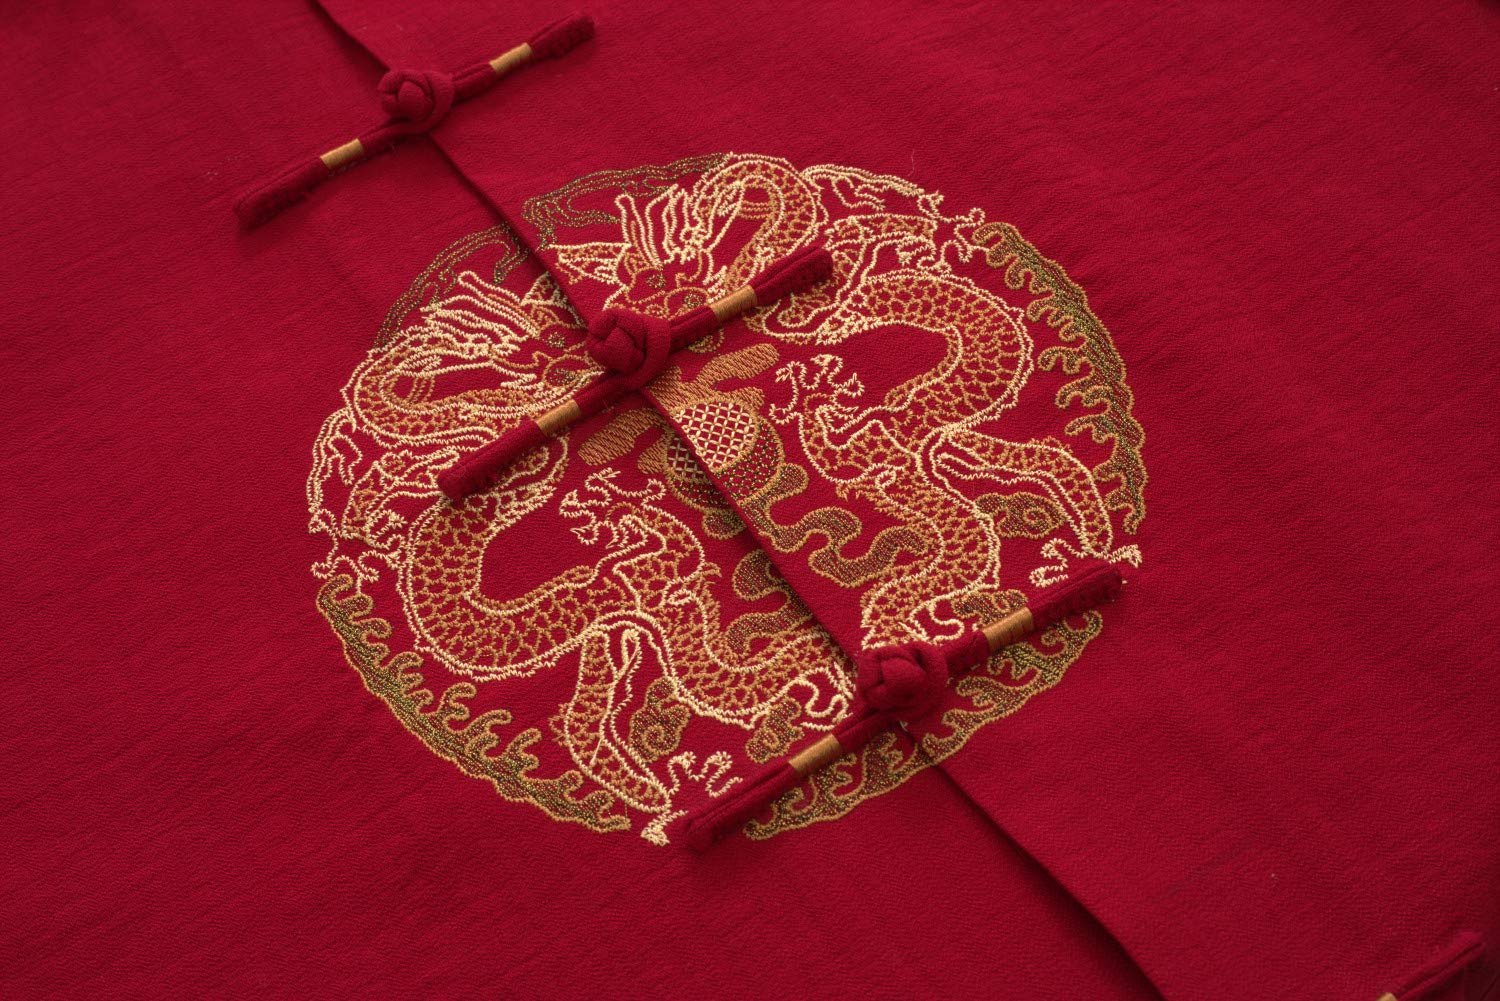 Shanghai Story Linen Short Sleeve Dragon Phoenix Embroidery Chinese Traditional Tai Chi Clothing Kung Fu Shirt for Men Women